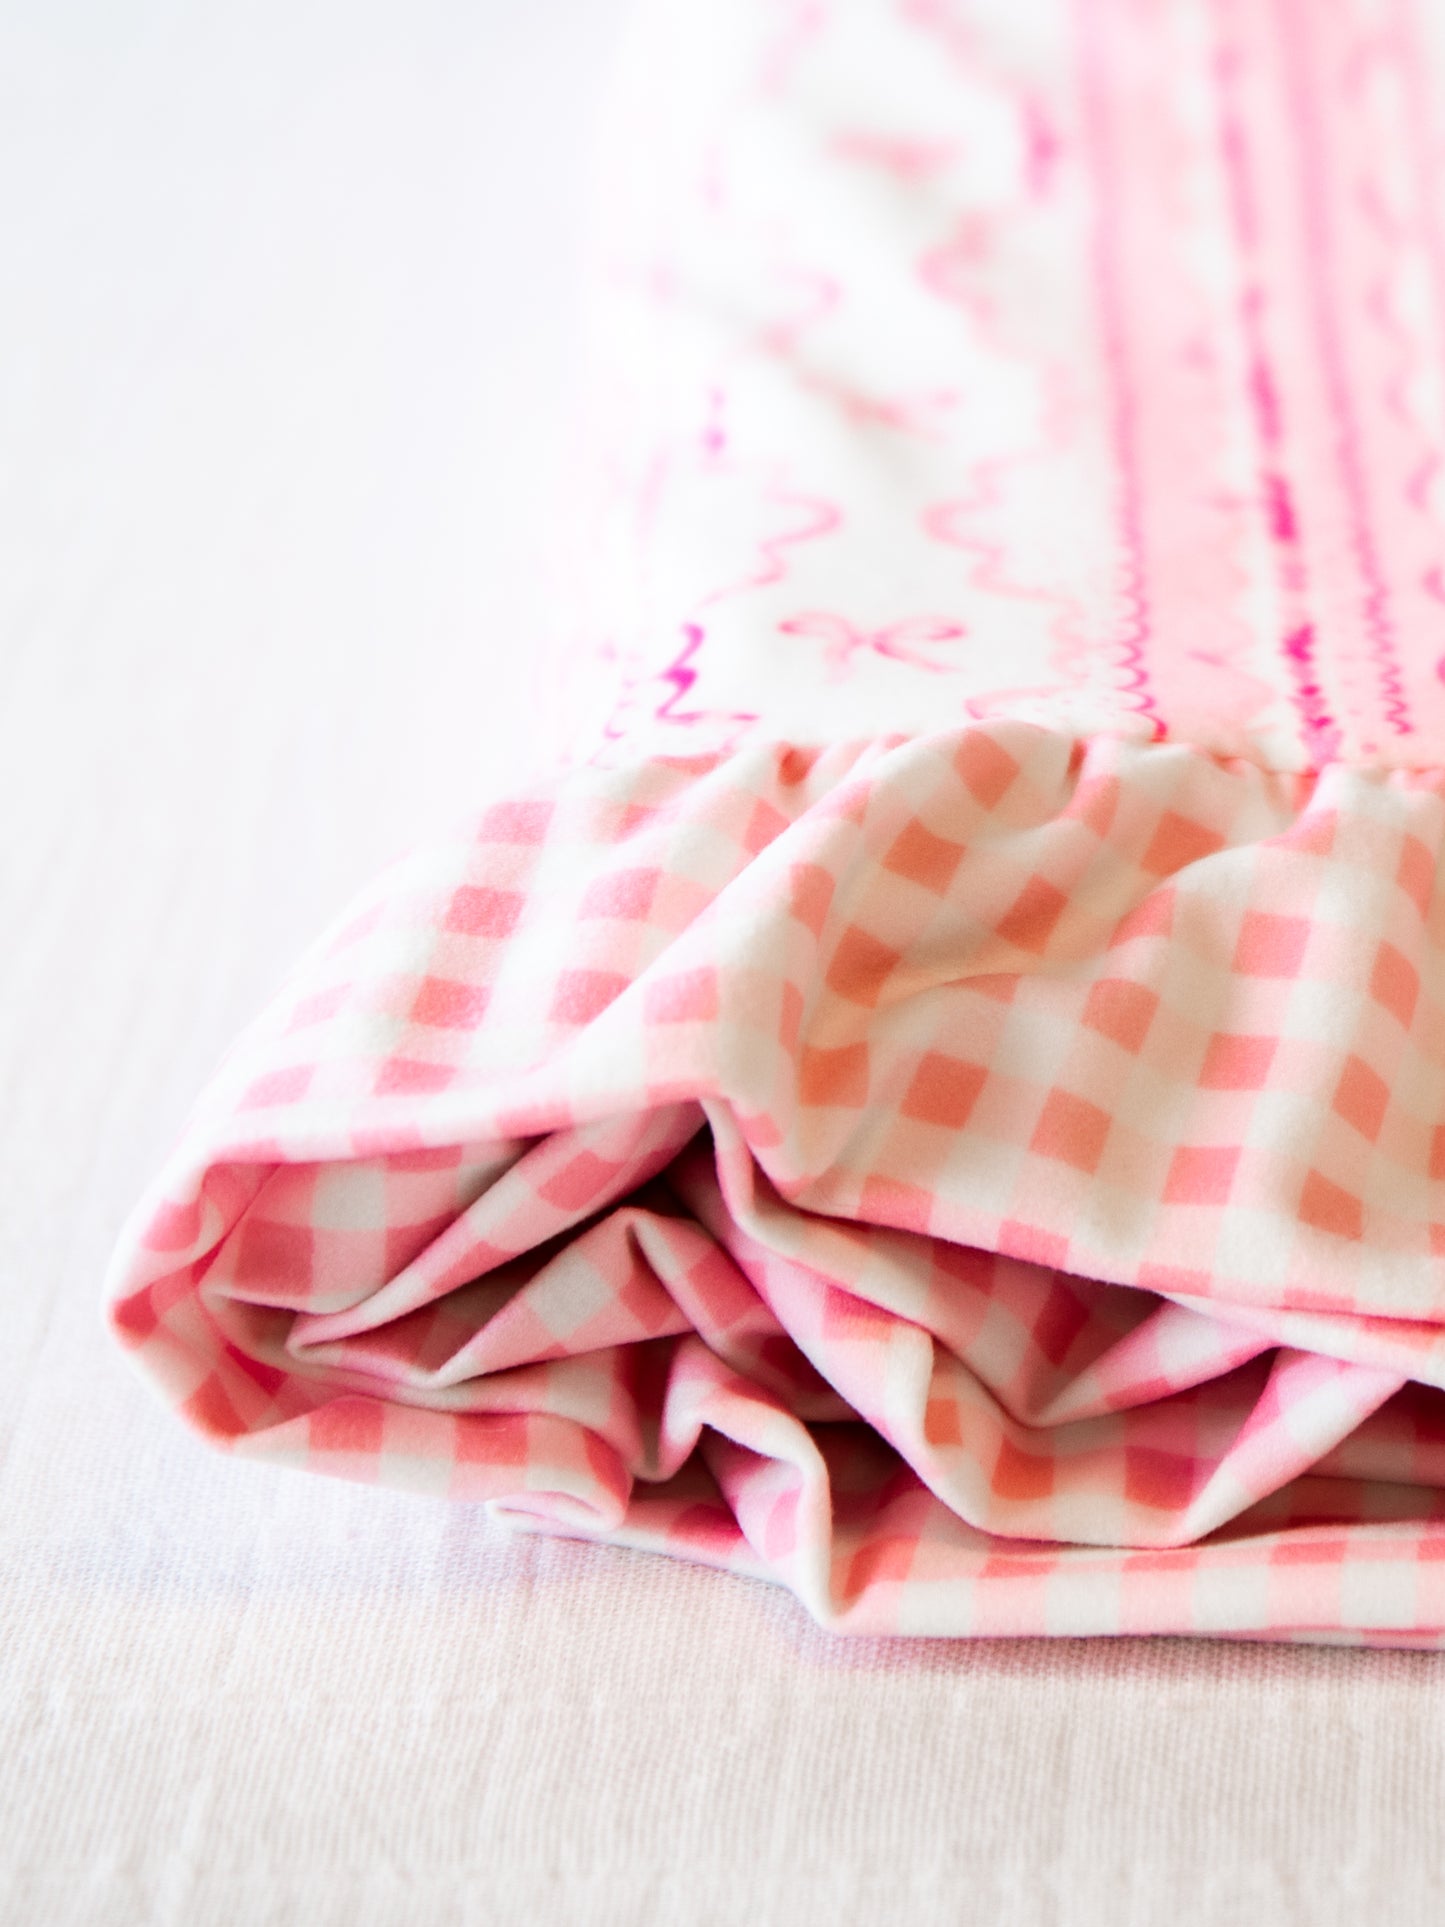 Dreamer Ruffled Blanket - Pink Lace